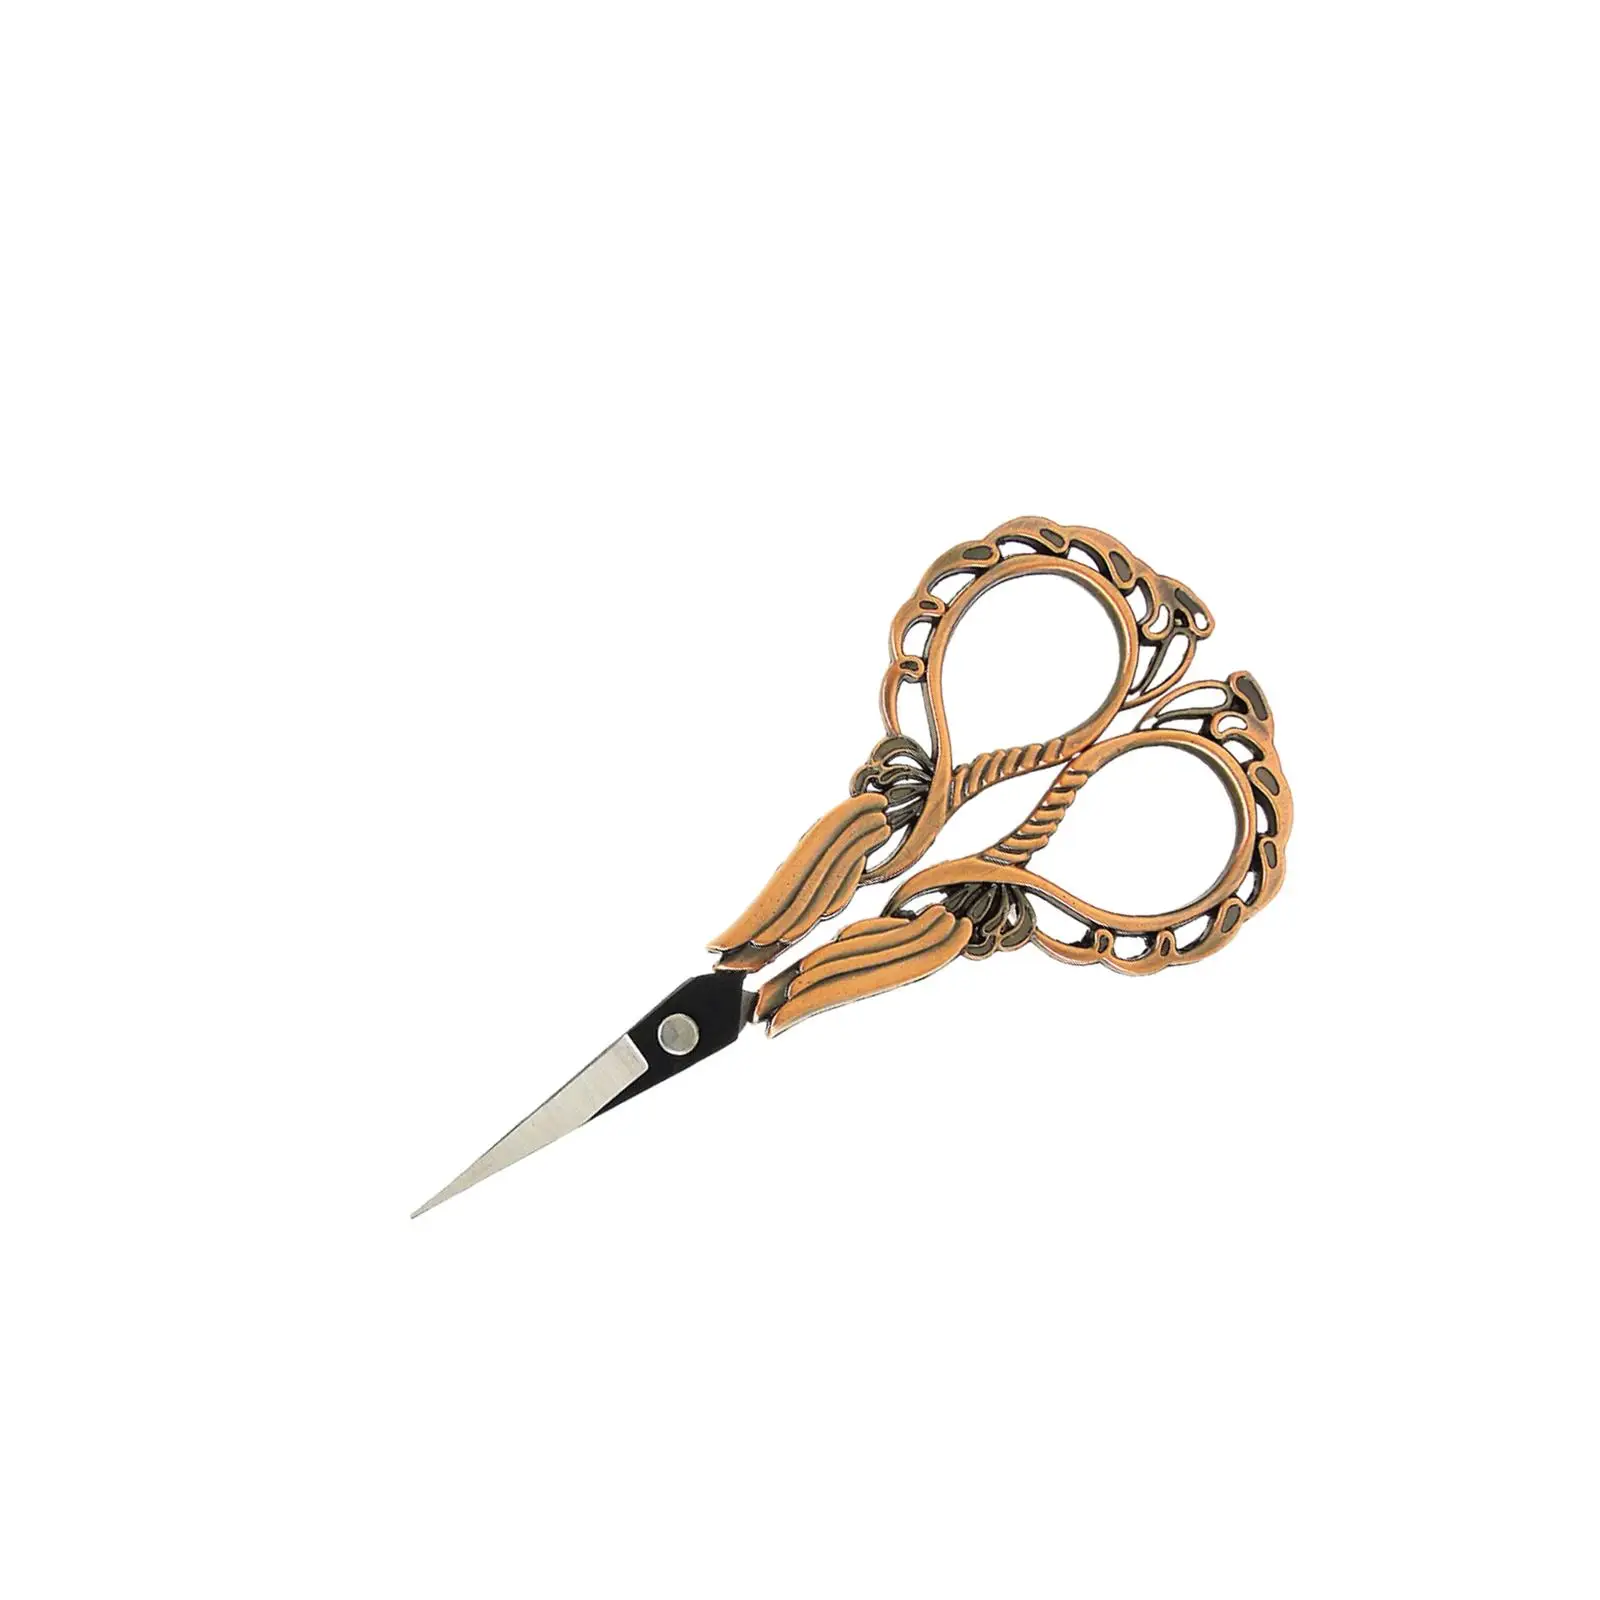 Embroidery Scissors Orchid Scissors for Needlework Dressmaking Artwork